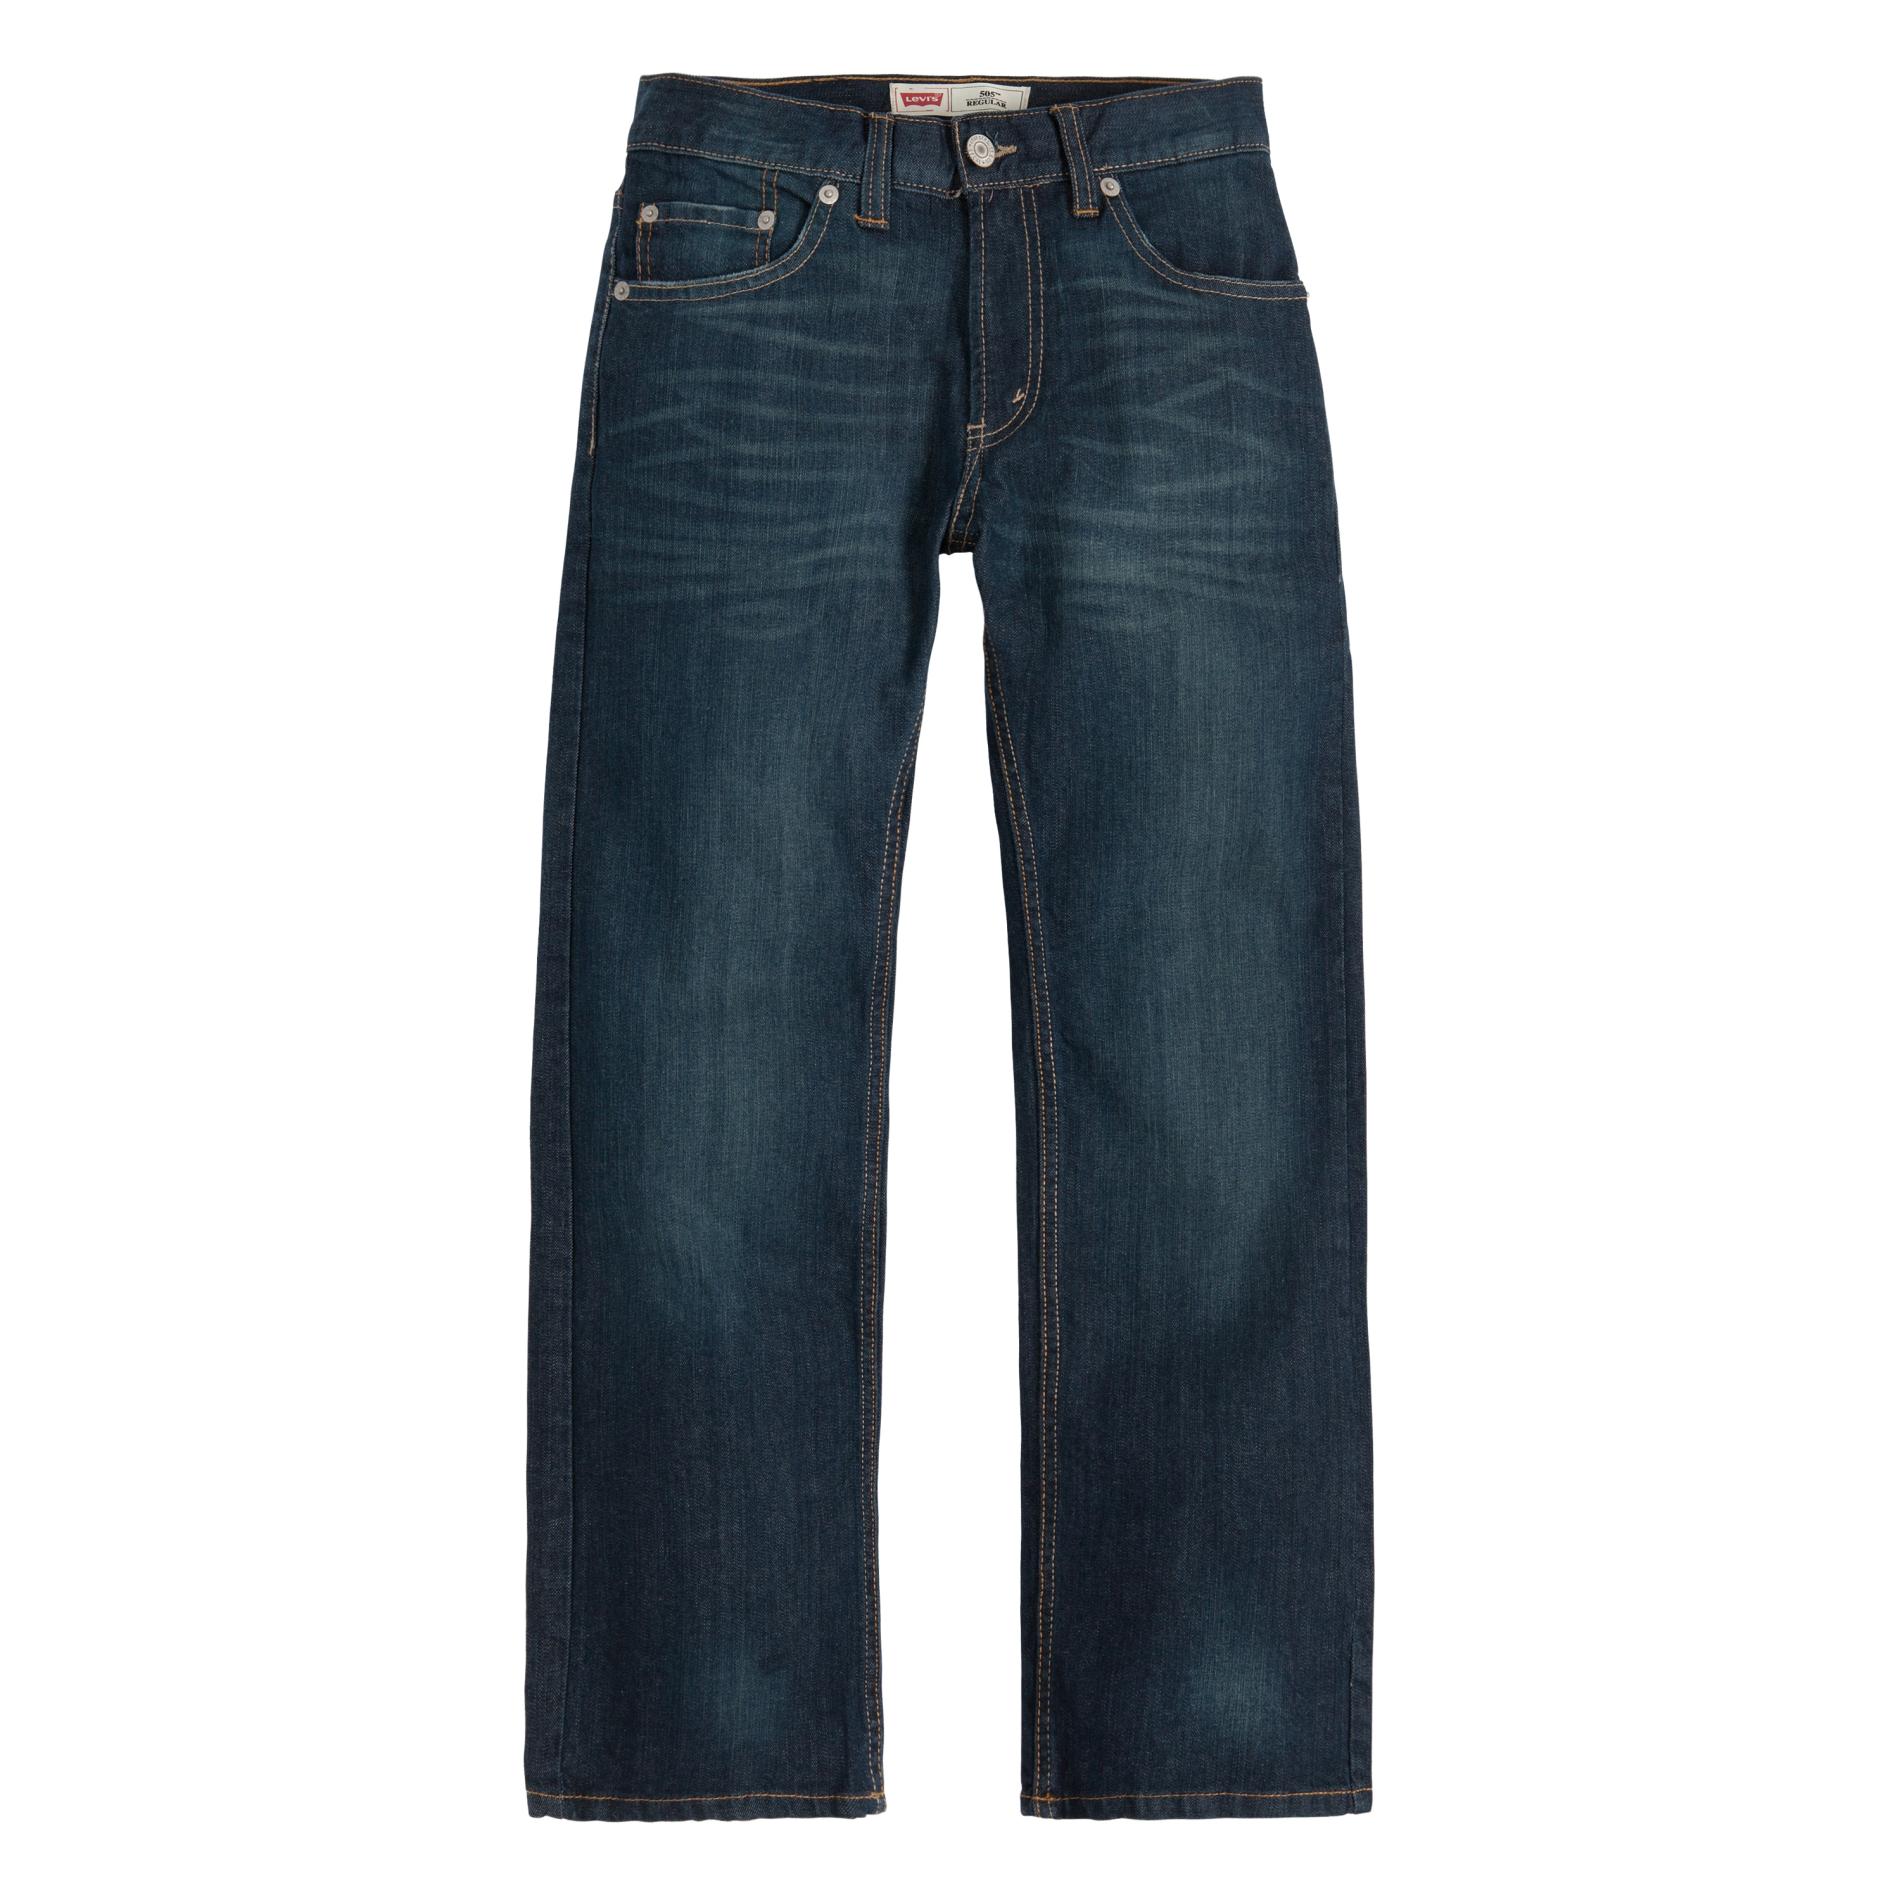 Levi Strauss Boys' 505 Regular Fit Jeans